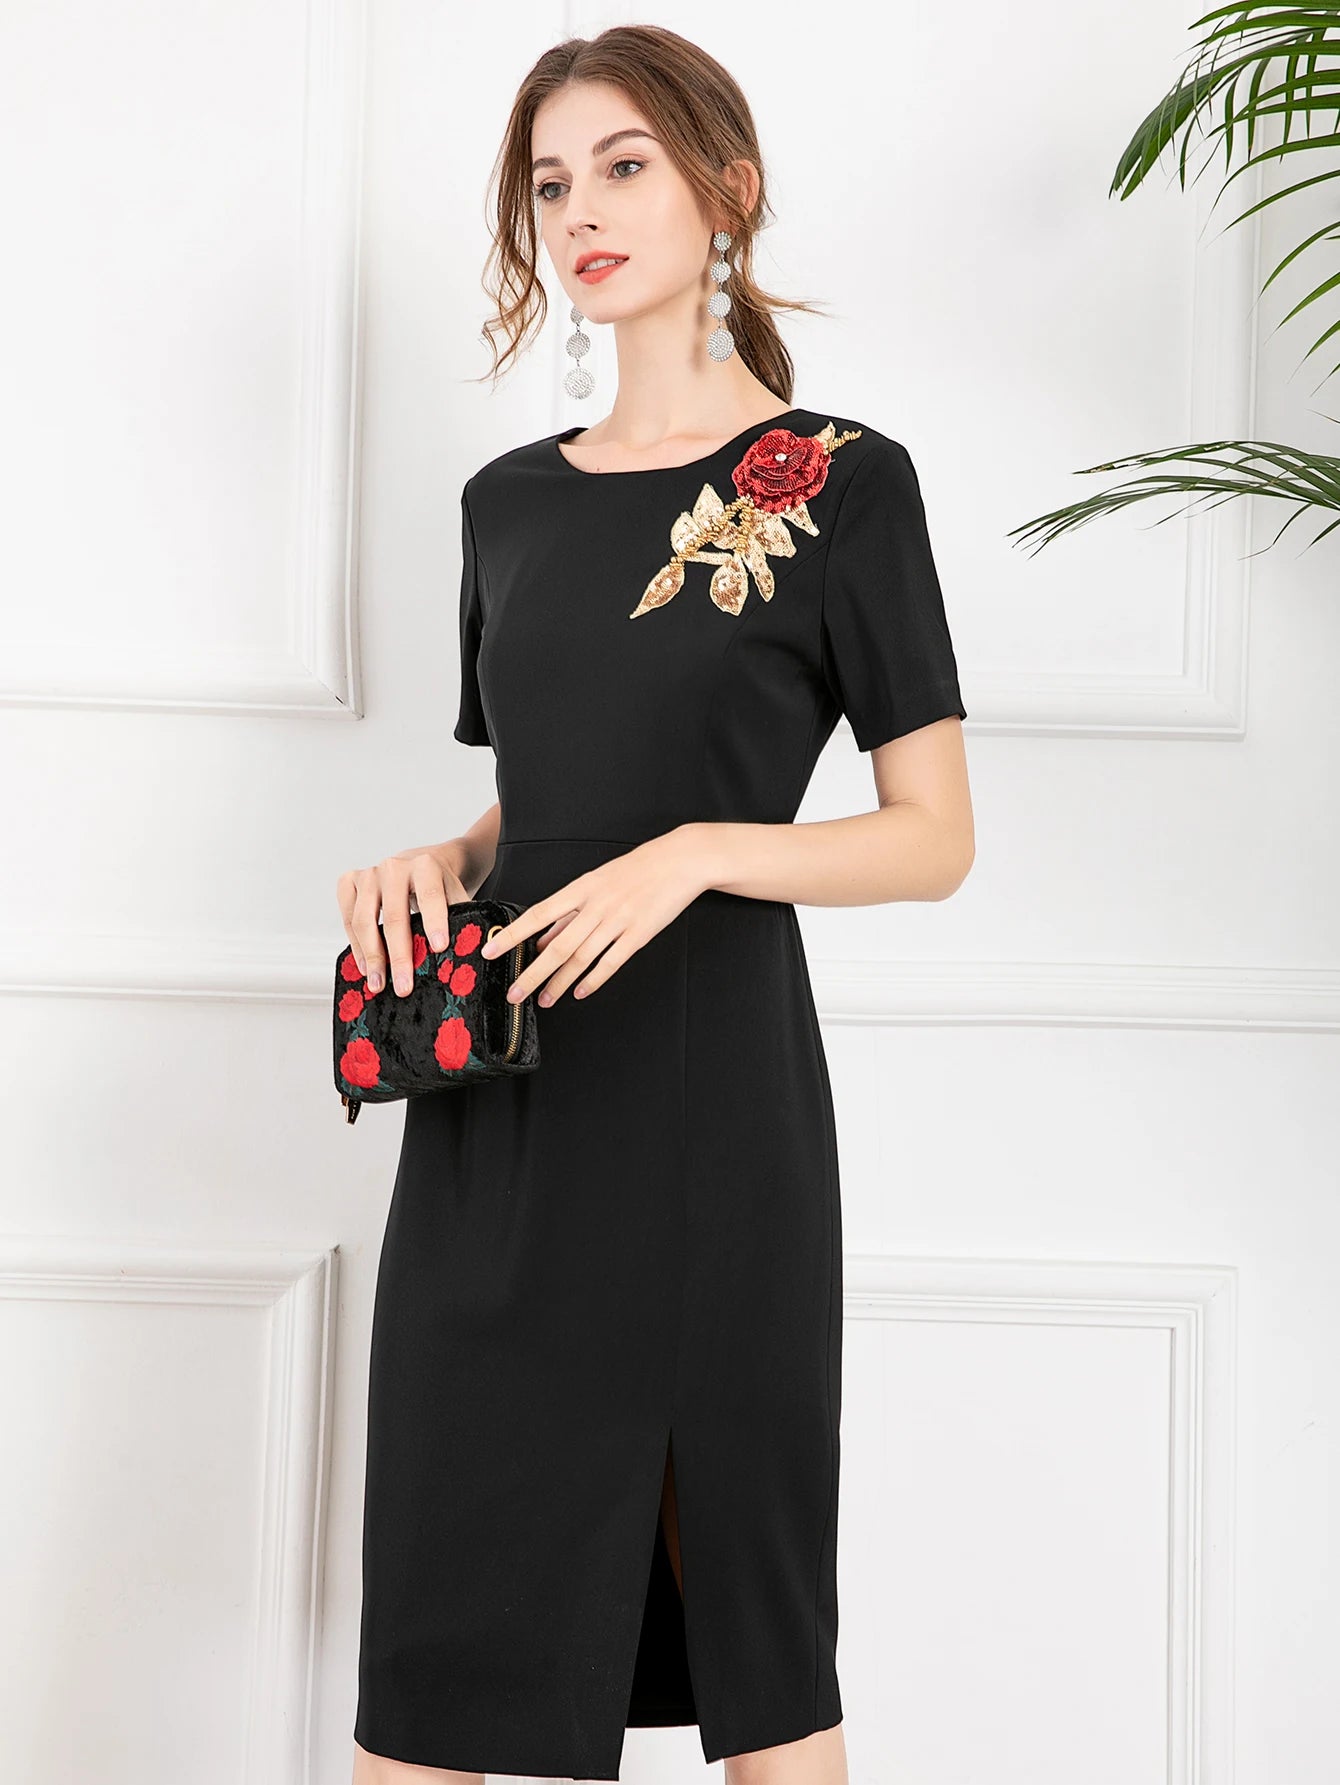 Tinsley Short Sleeve Luxury Floral Beaded Sequins Slim Midi Party Dress